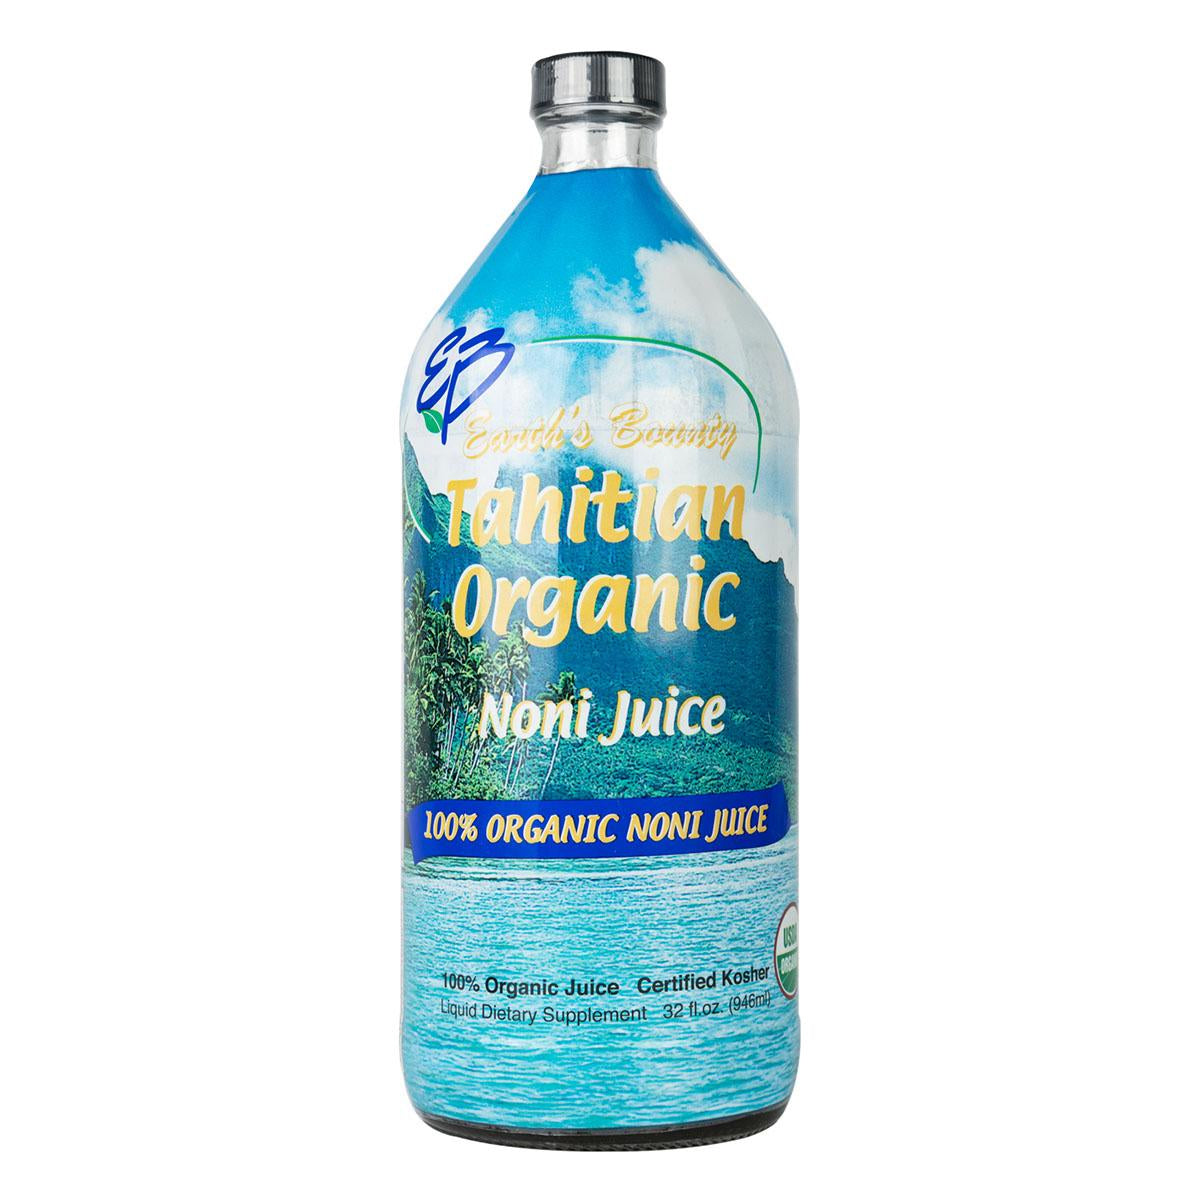 Primary image of Tahitian Organic Noni Juice